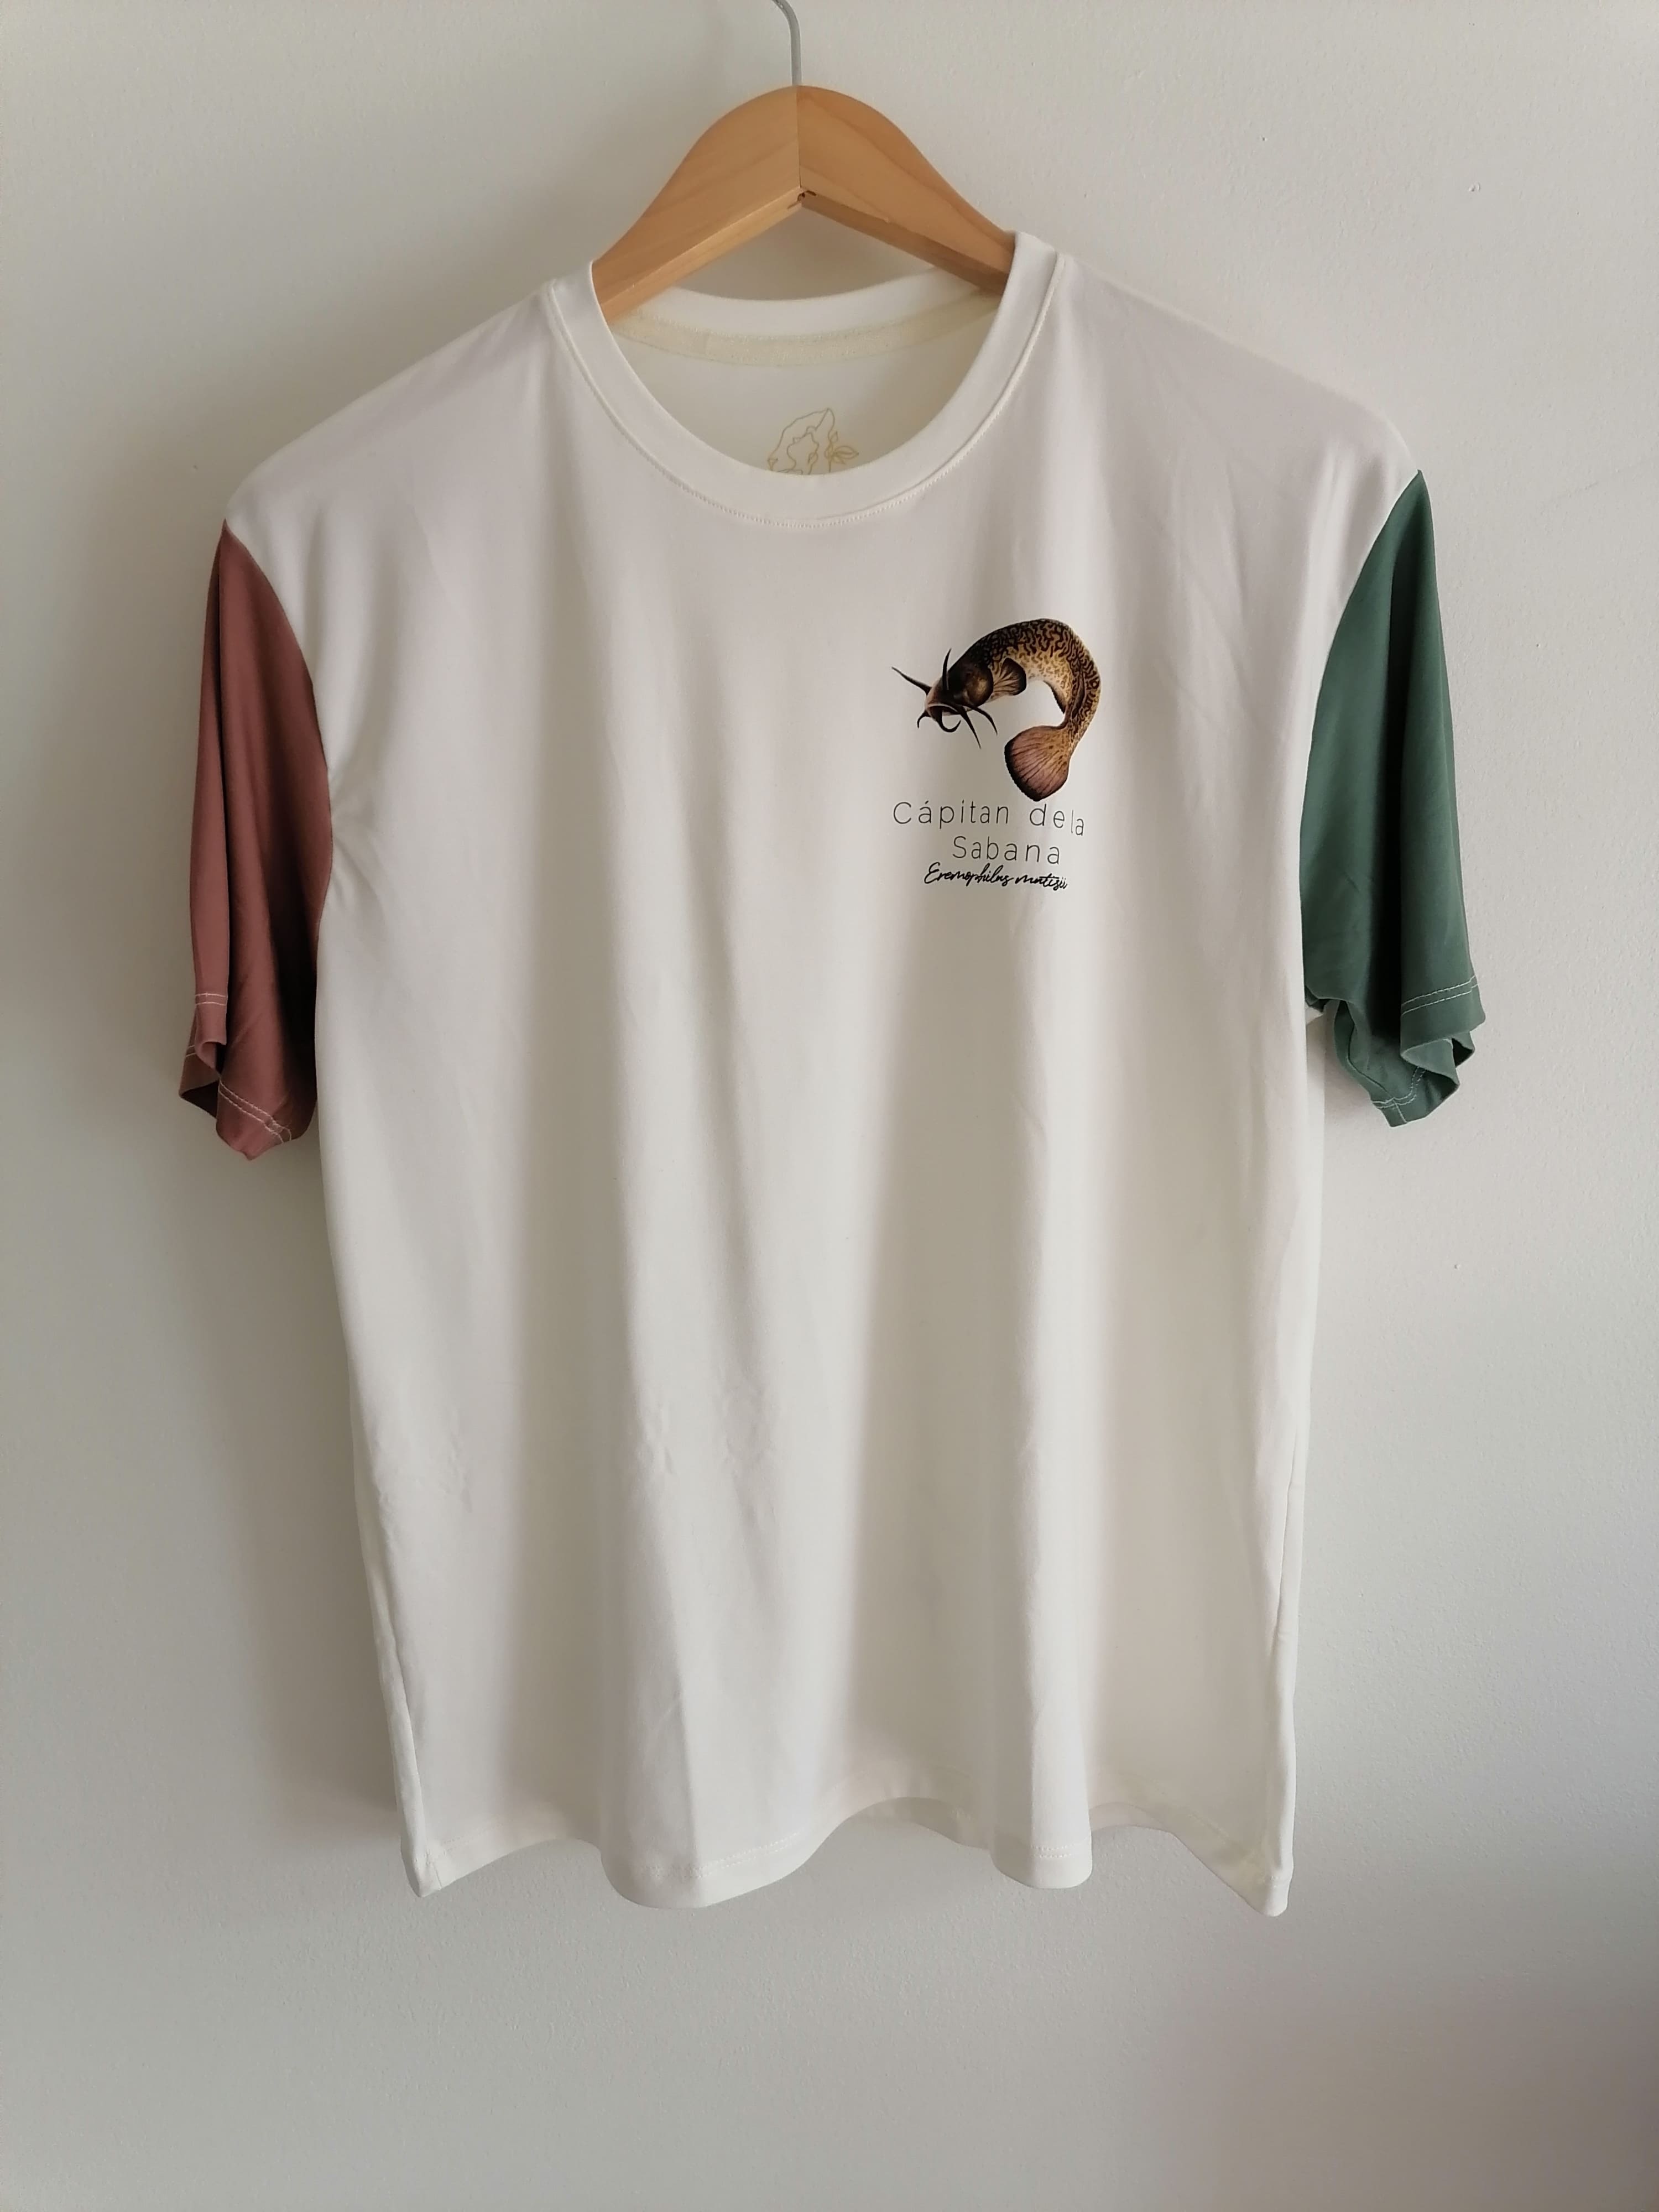 Camiseta unisex de capitán de la sabana